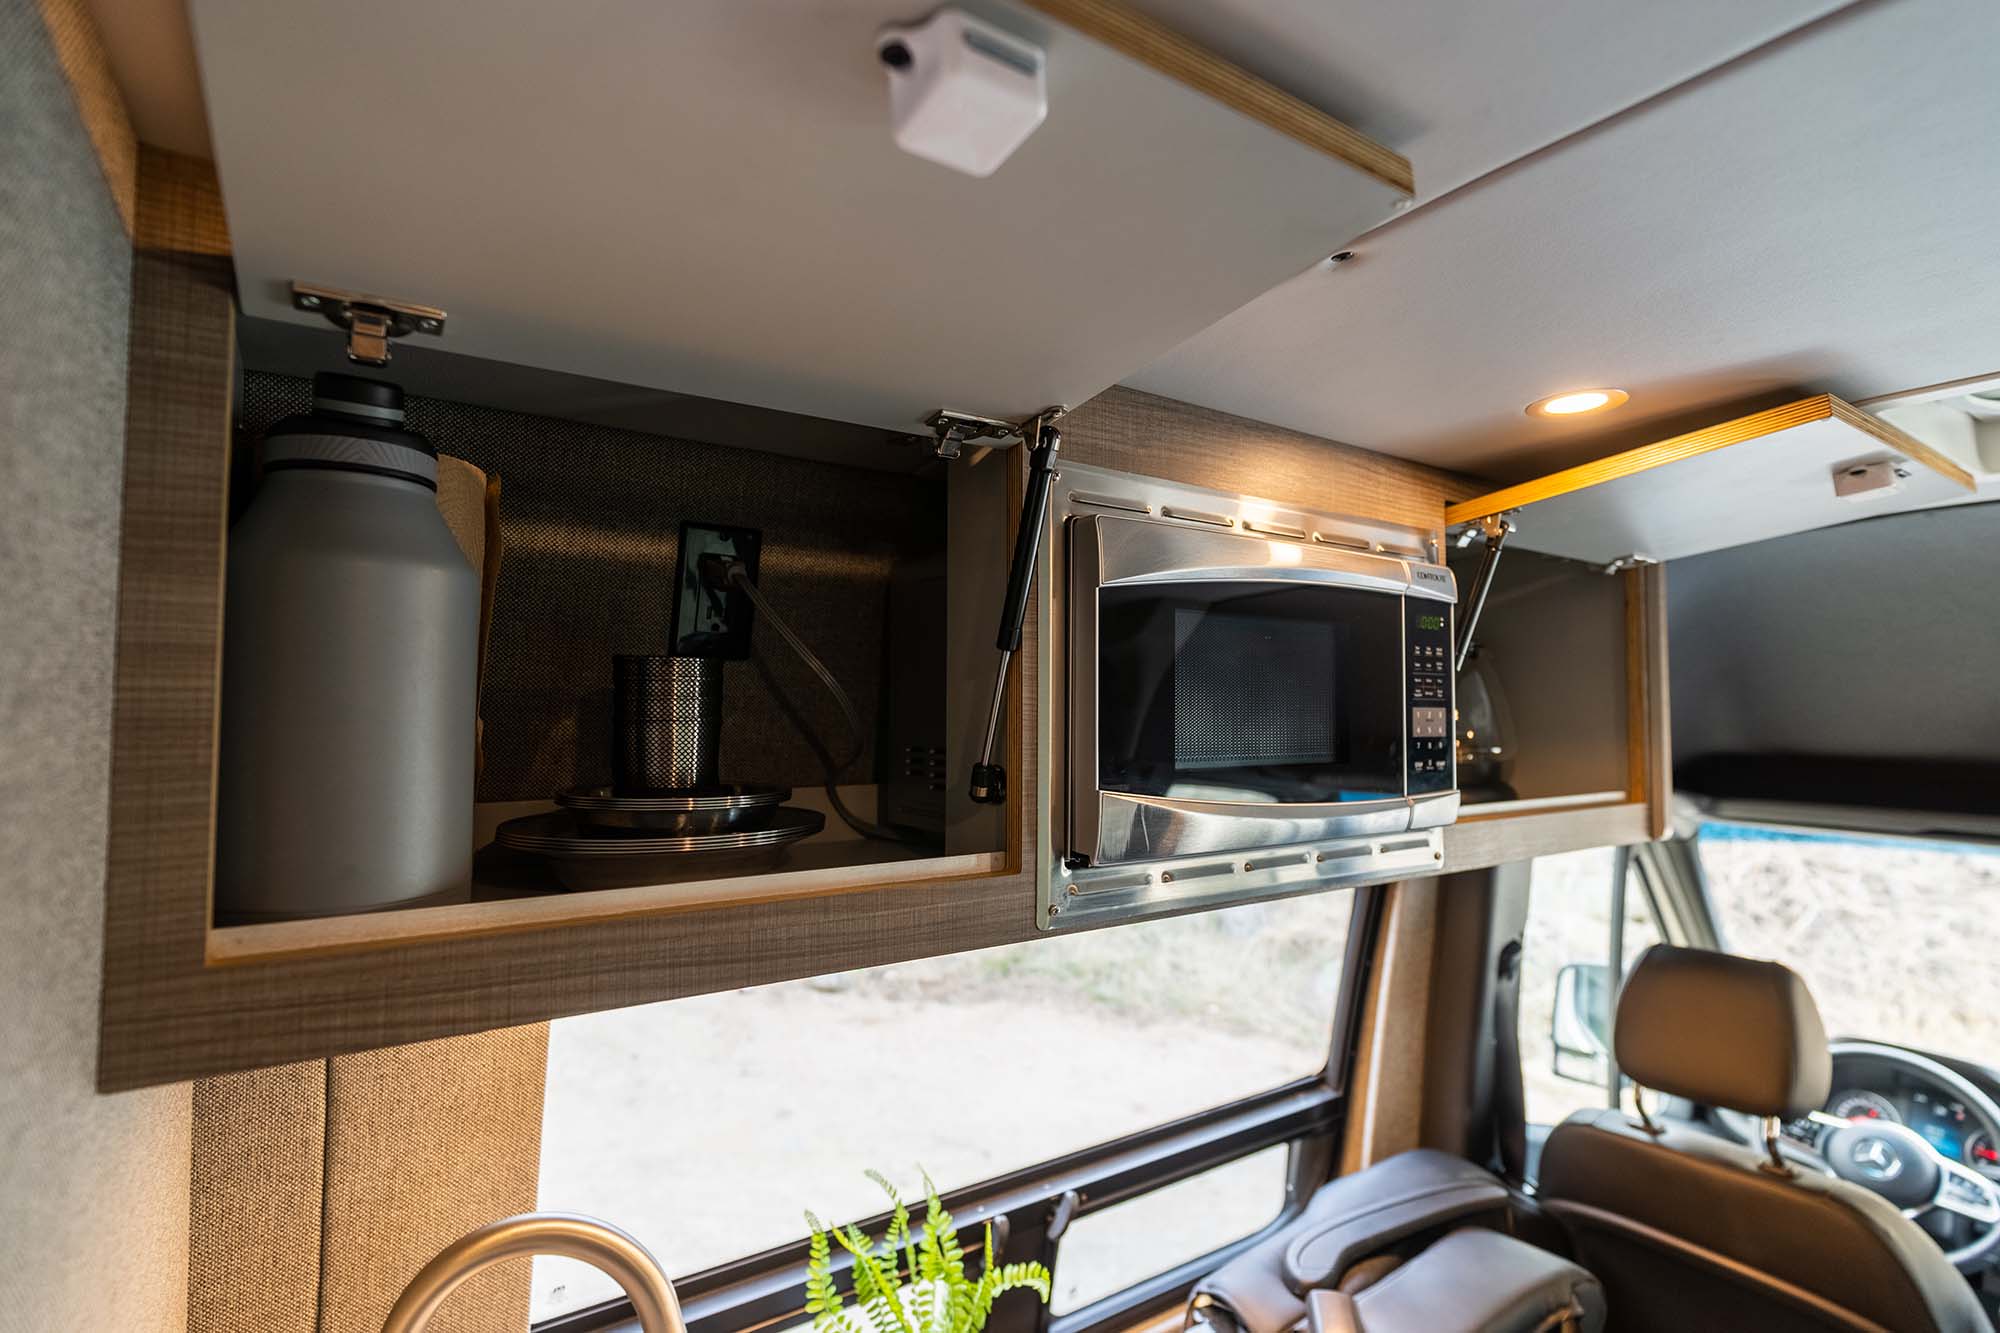 camper van cabinets with microwave